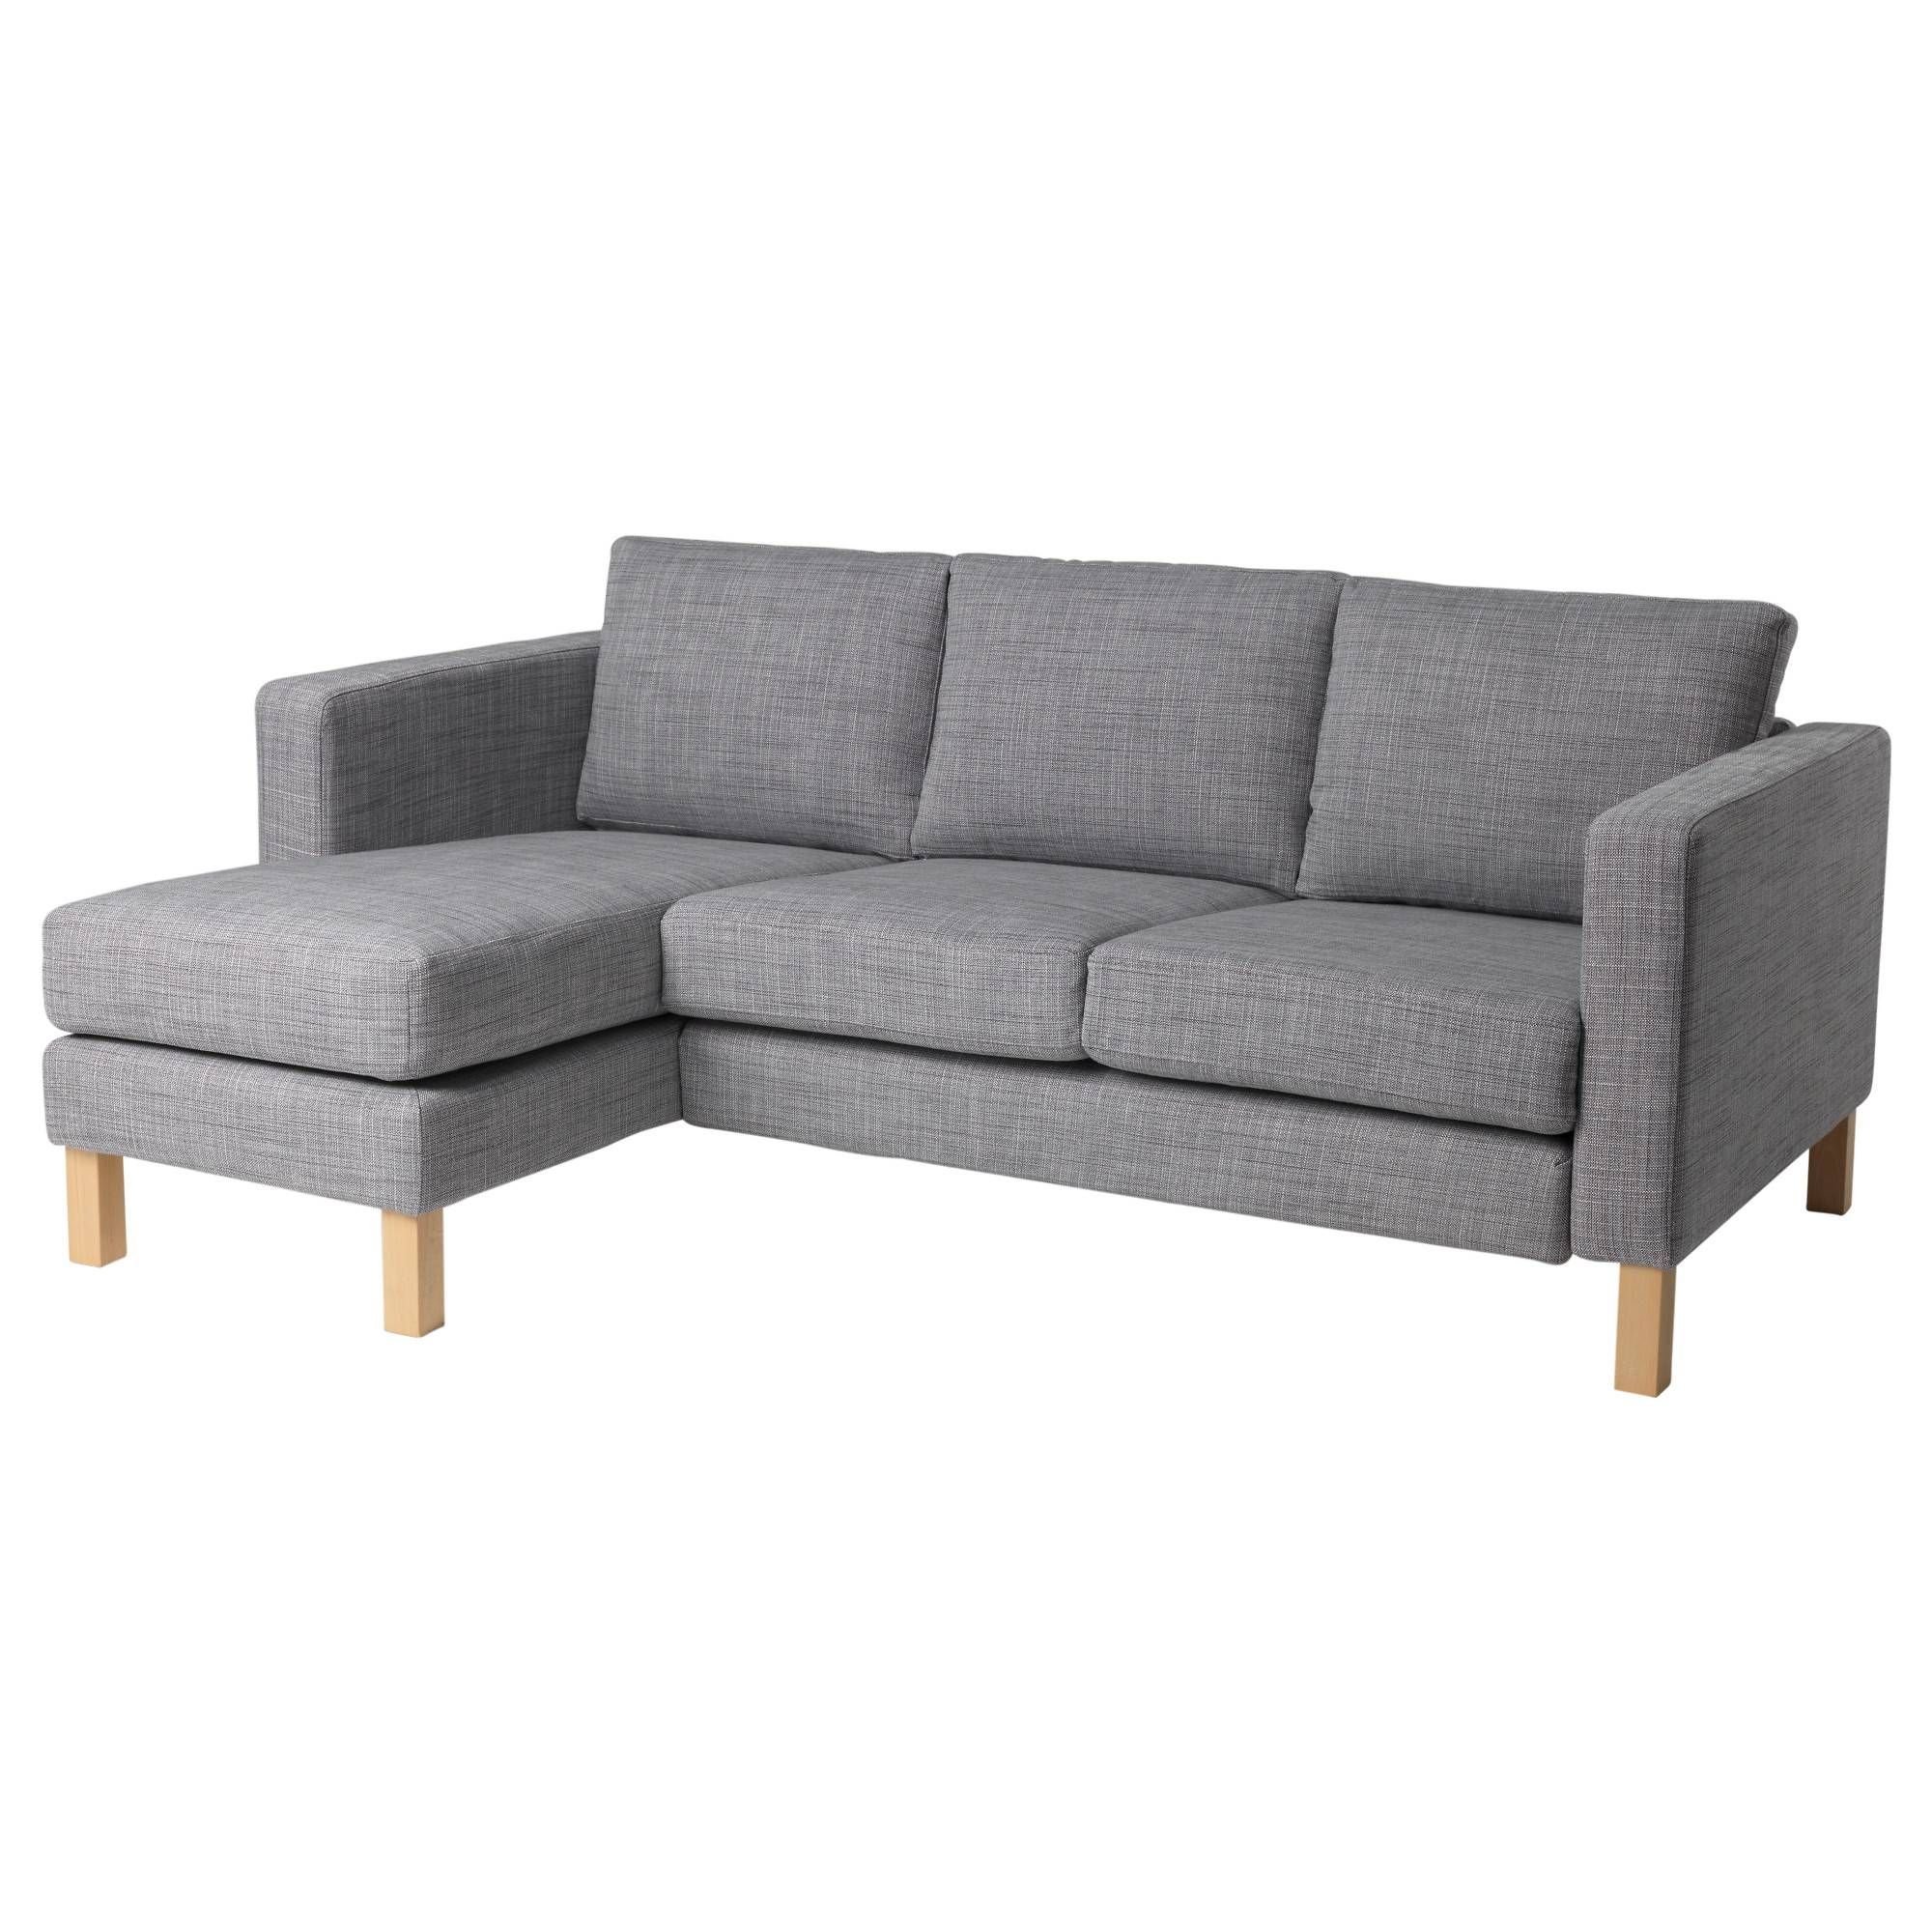 Karlstad Compact 2 Seat Sofa W Chaise Lounge – Isunda Grey – Ikea With Ikea Chaise Lounge Sofa (View 17 of 30)